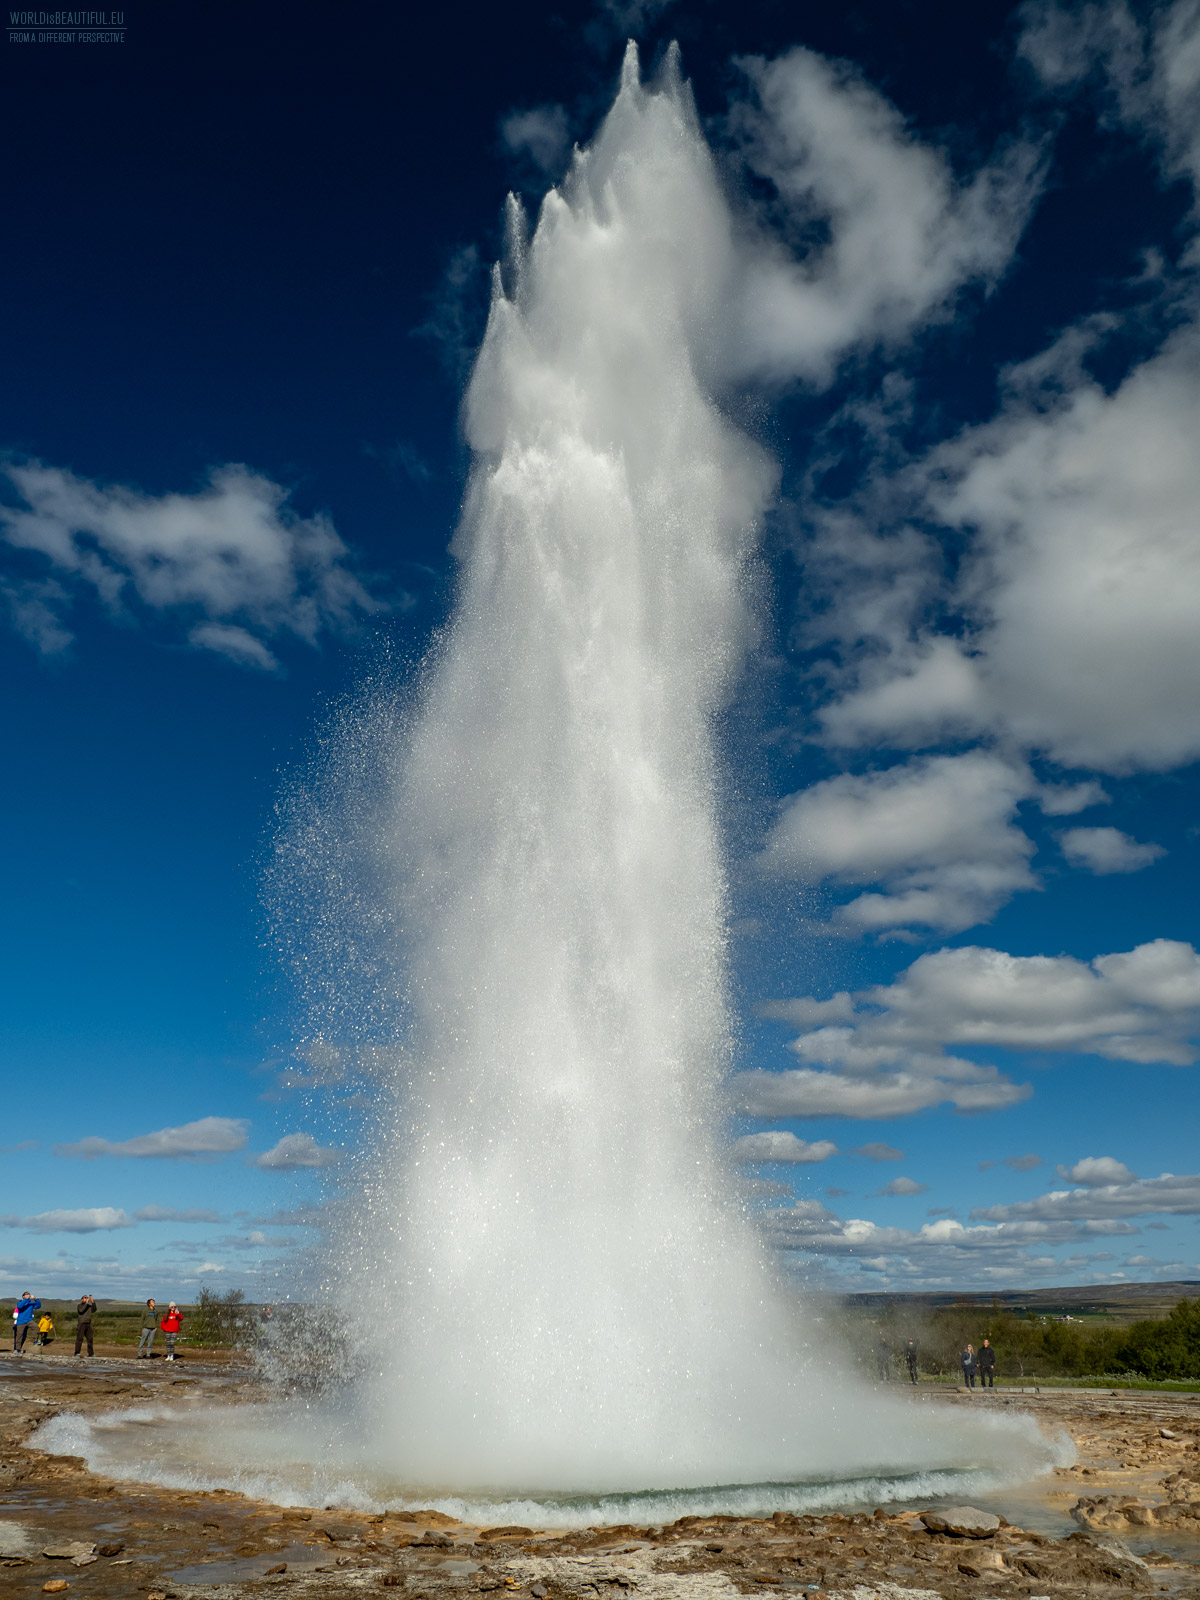 The largest geysers - Strokkur